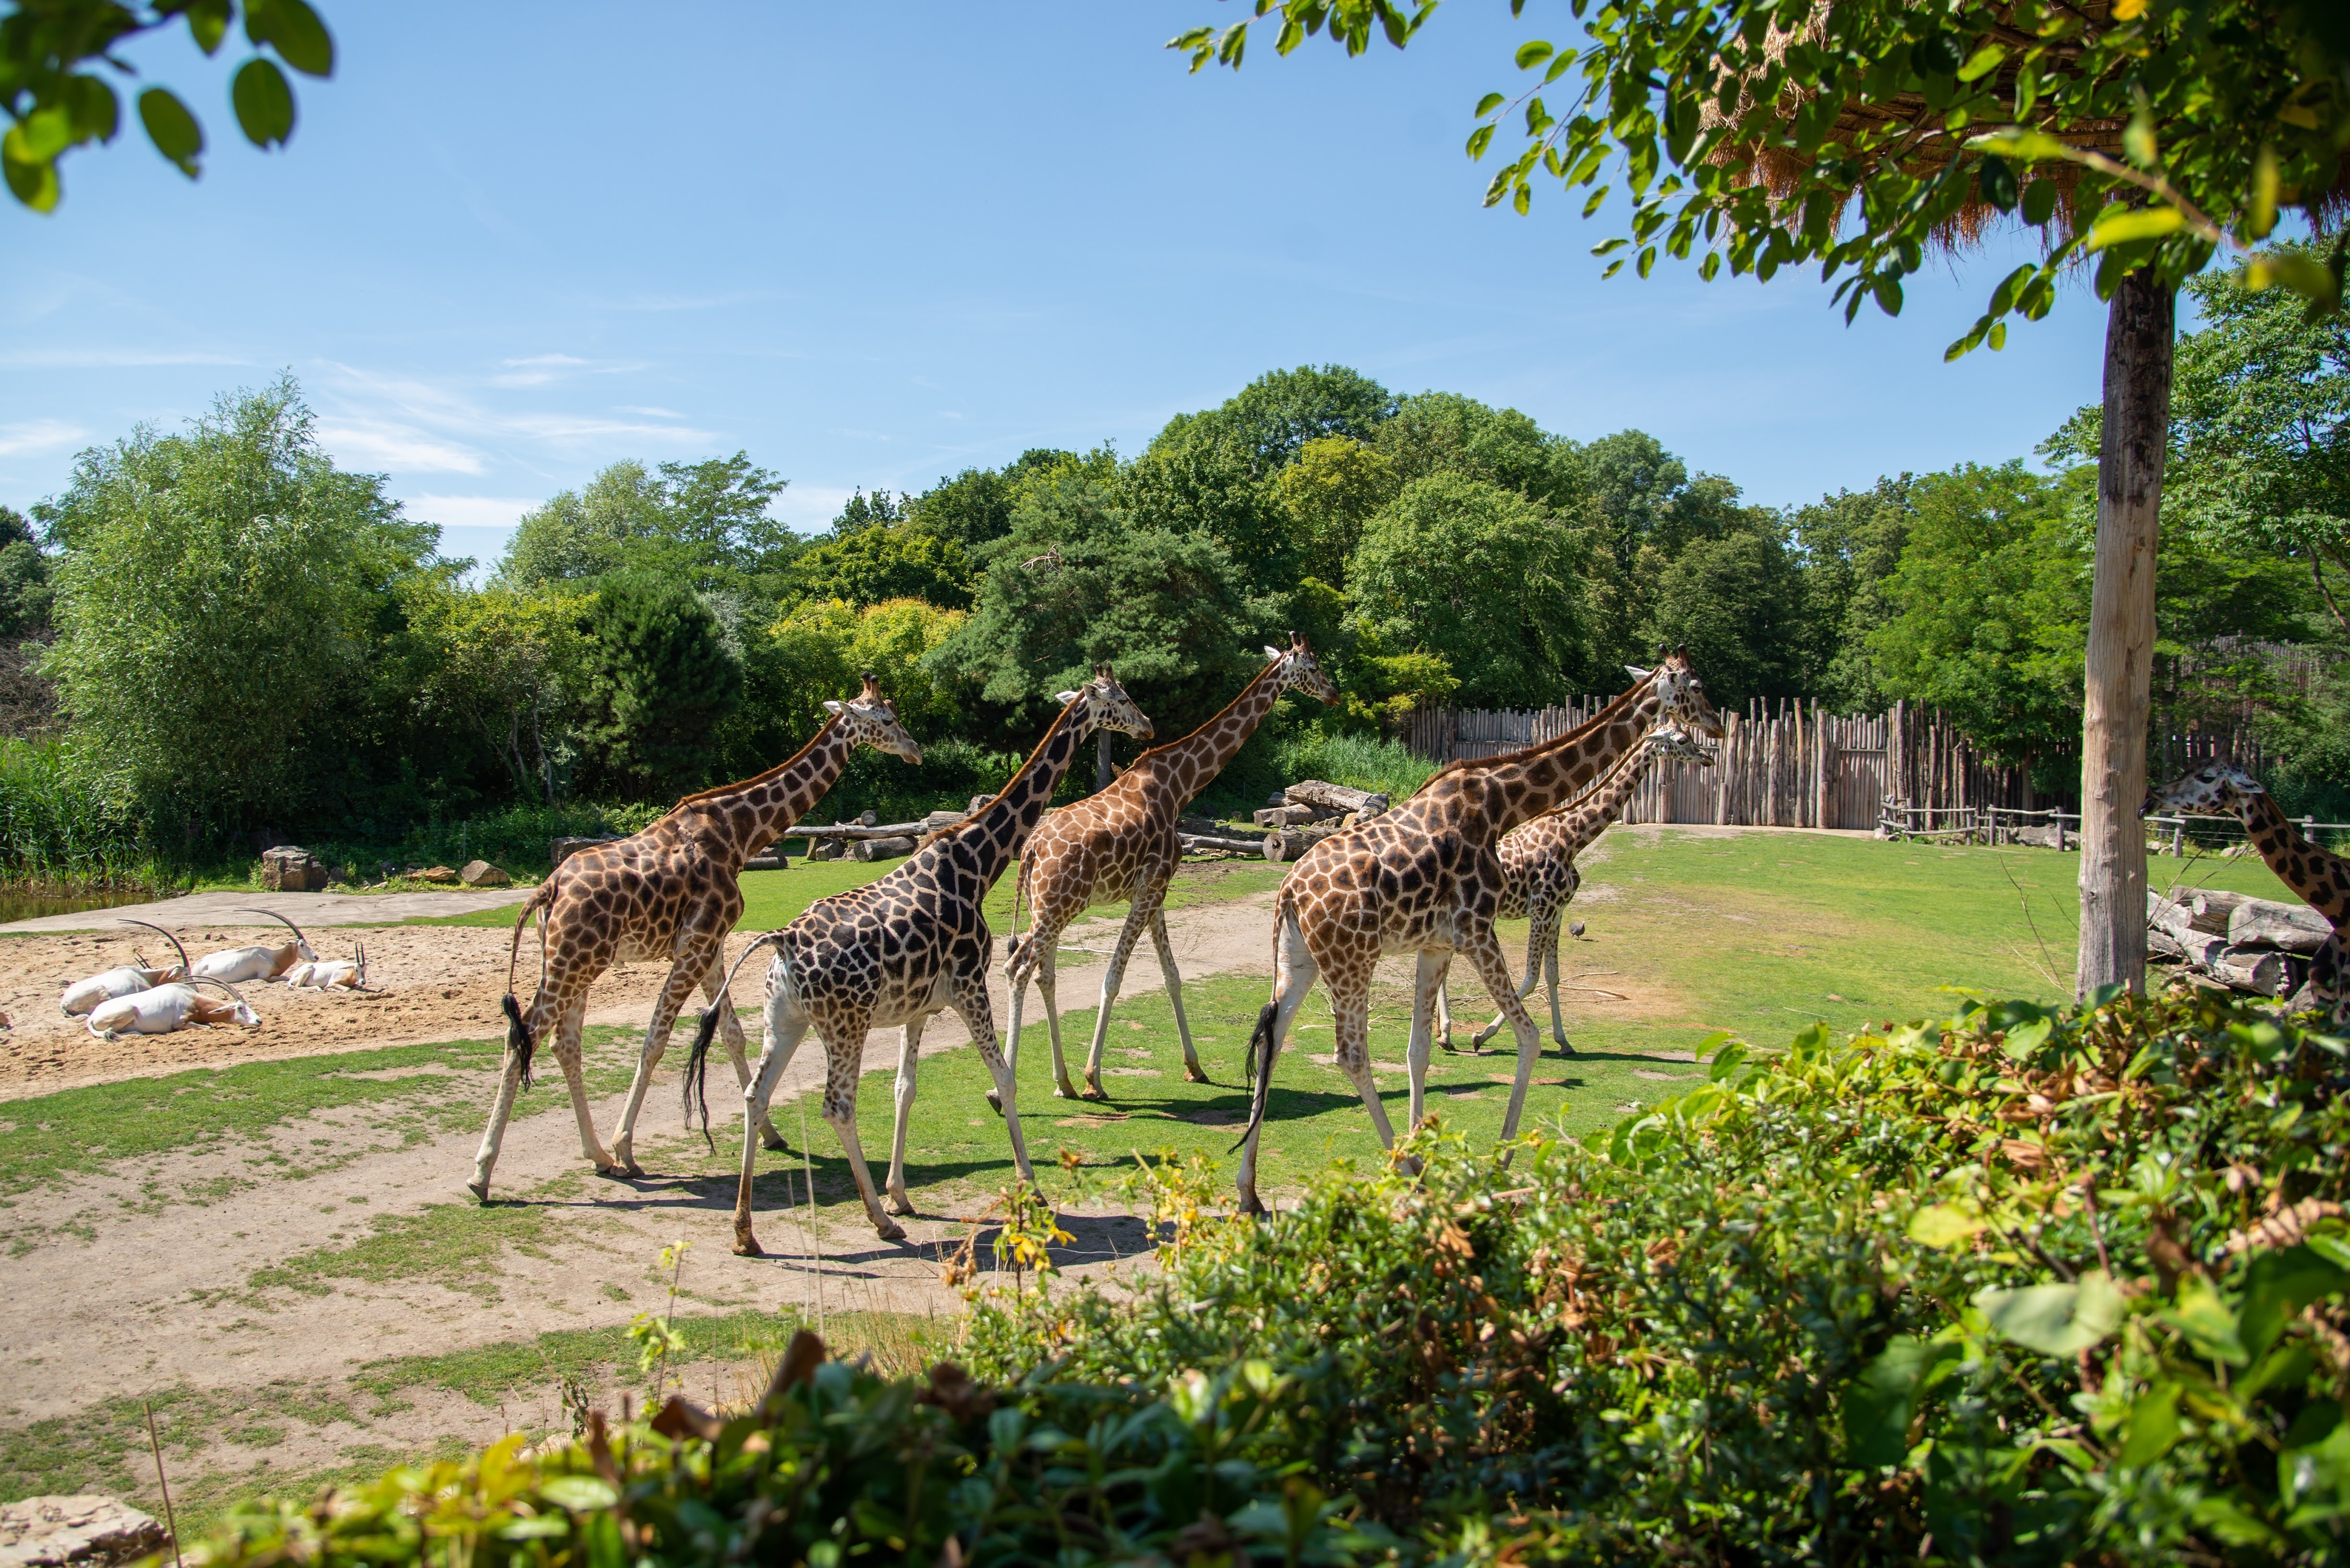 Giraffes at the zoo | Source: Shutterstock